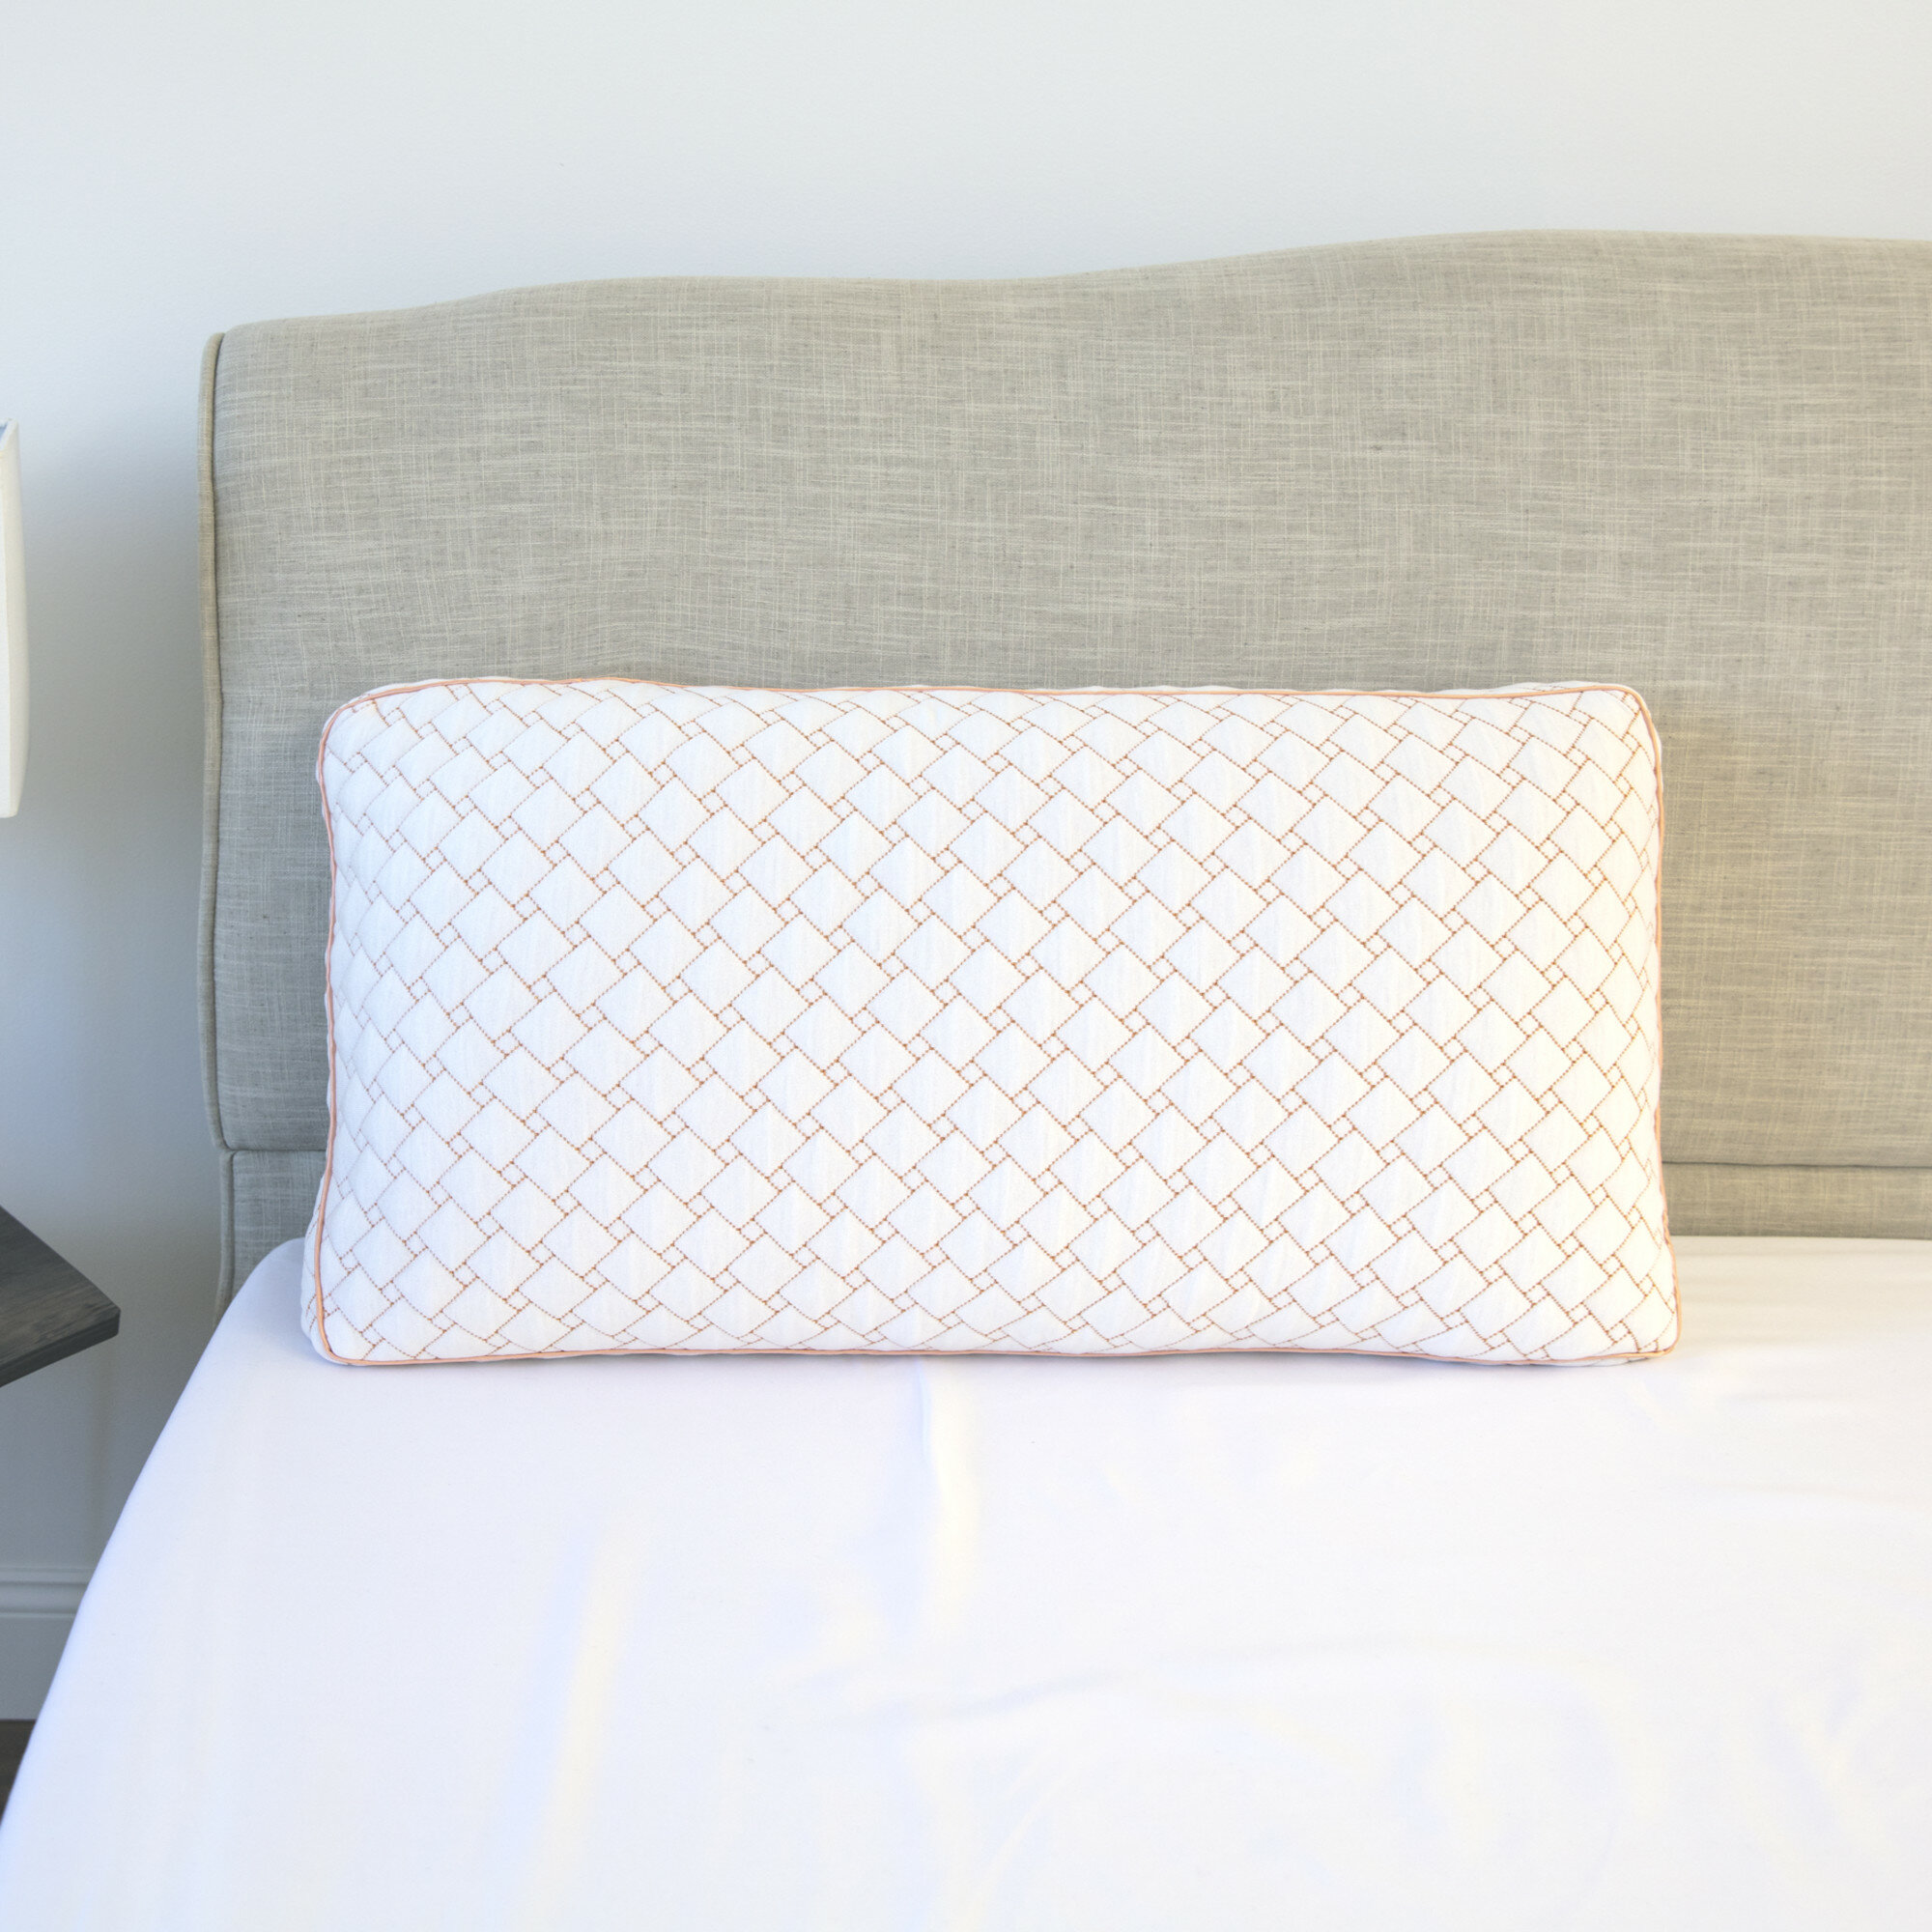 Sensorpedic Gel Infused Memory Foam Cluster Jumbo Bed Pillow With Copper Infused Cover Reviews Wayfair